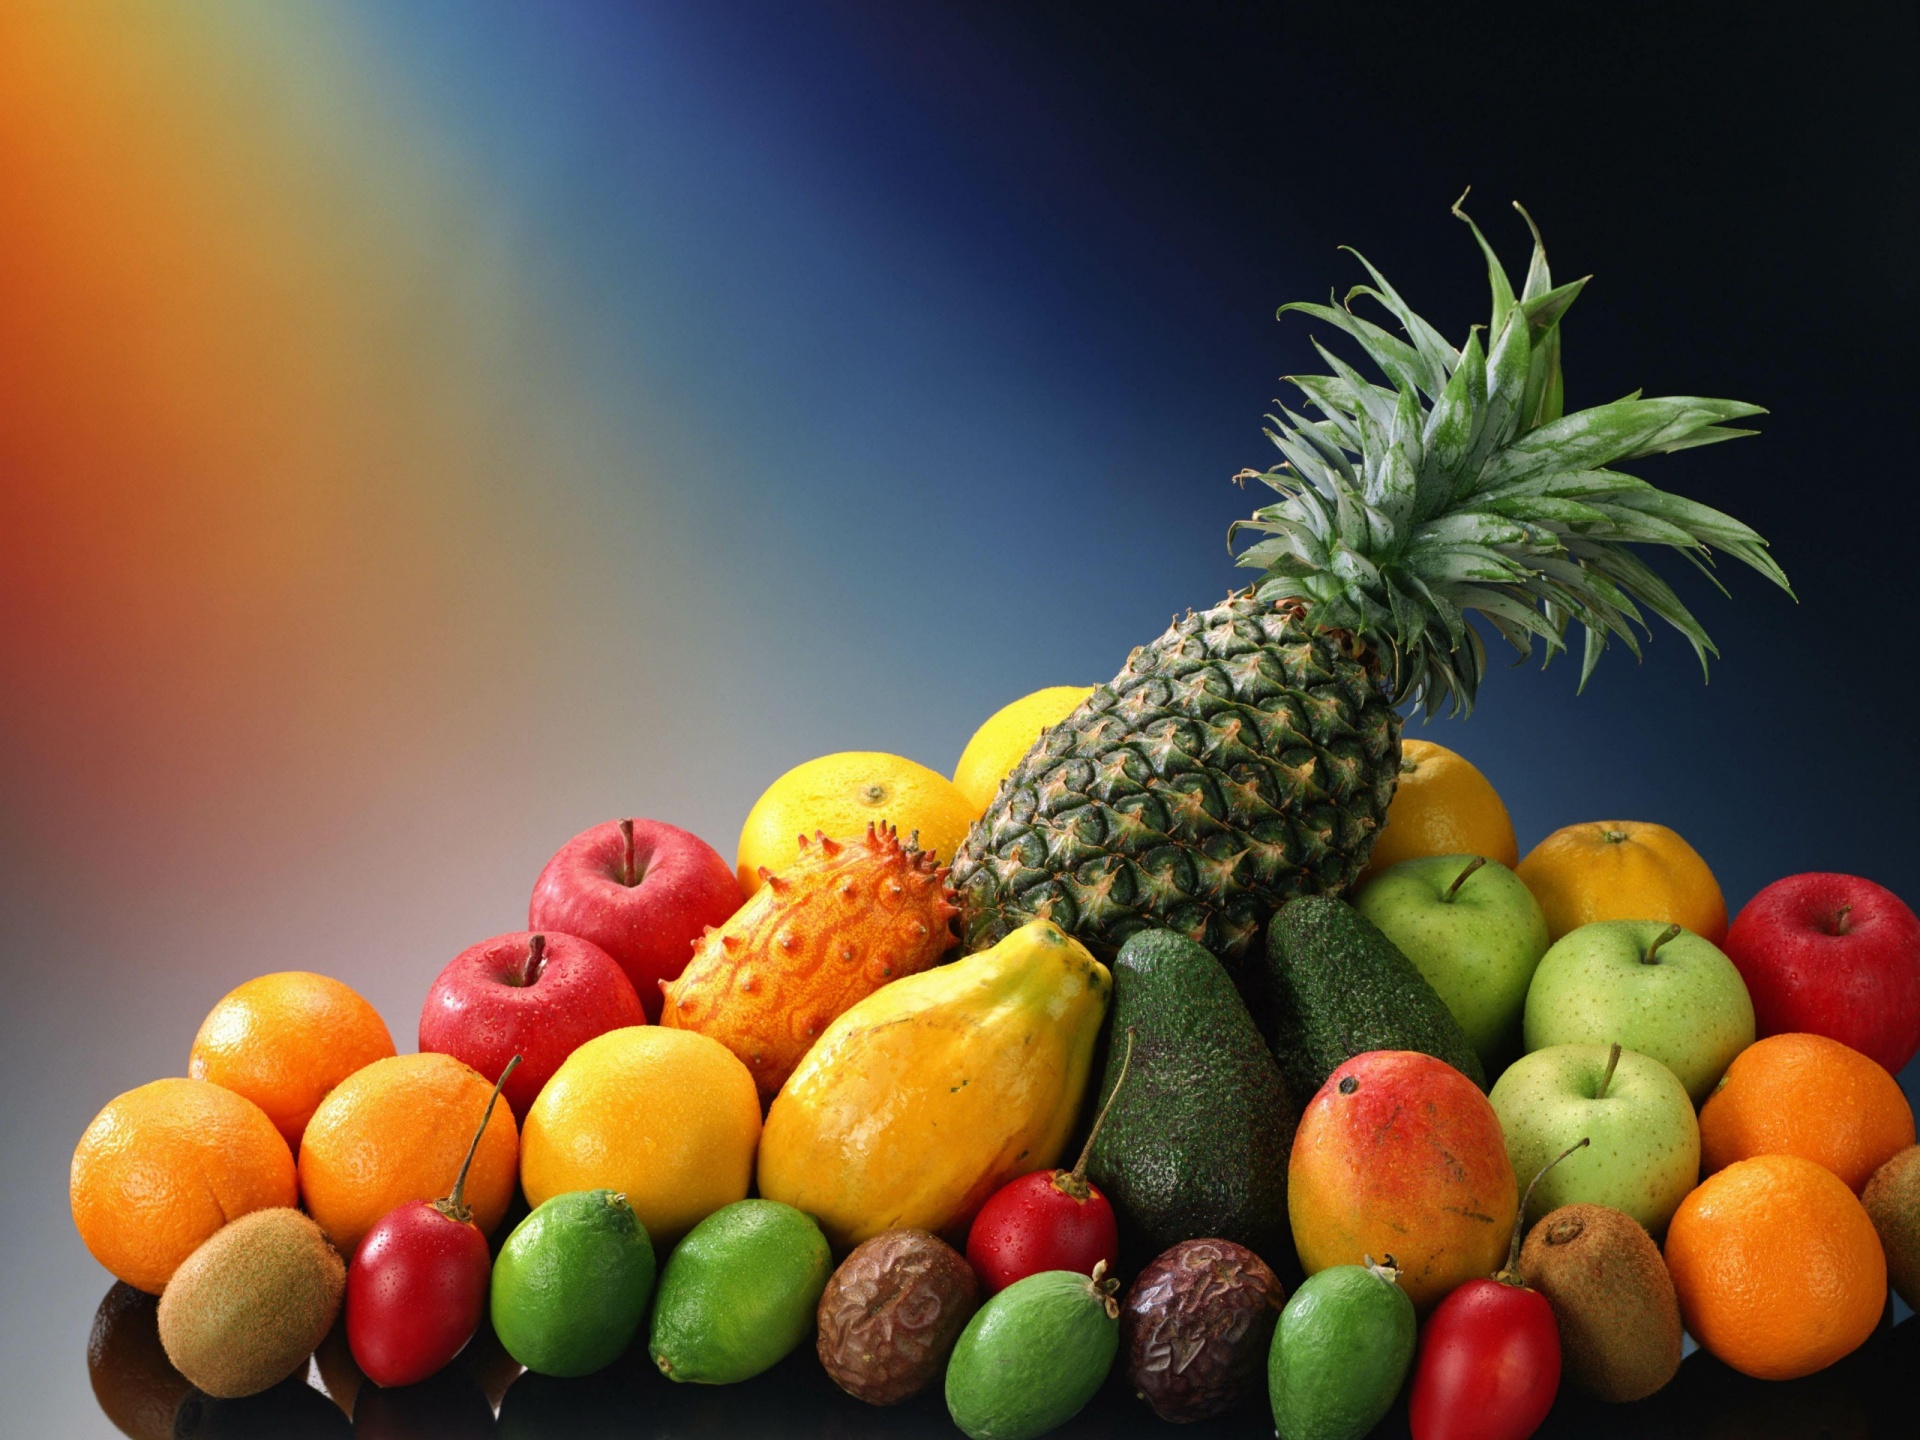 HD wallpaper food, fruit, apple, avocado, orange (fruit), pineapple